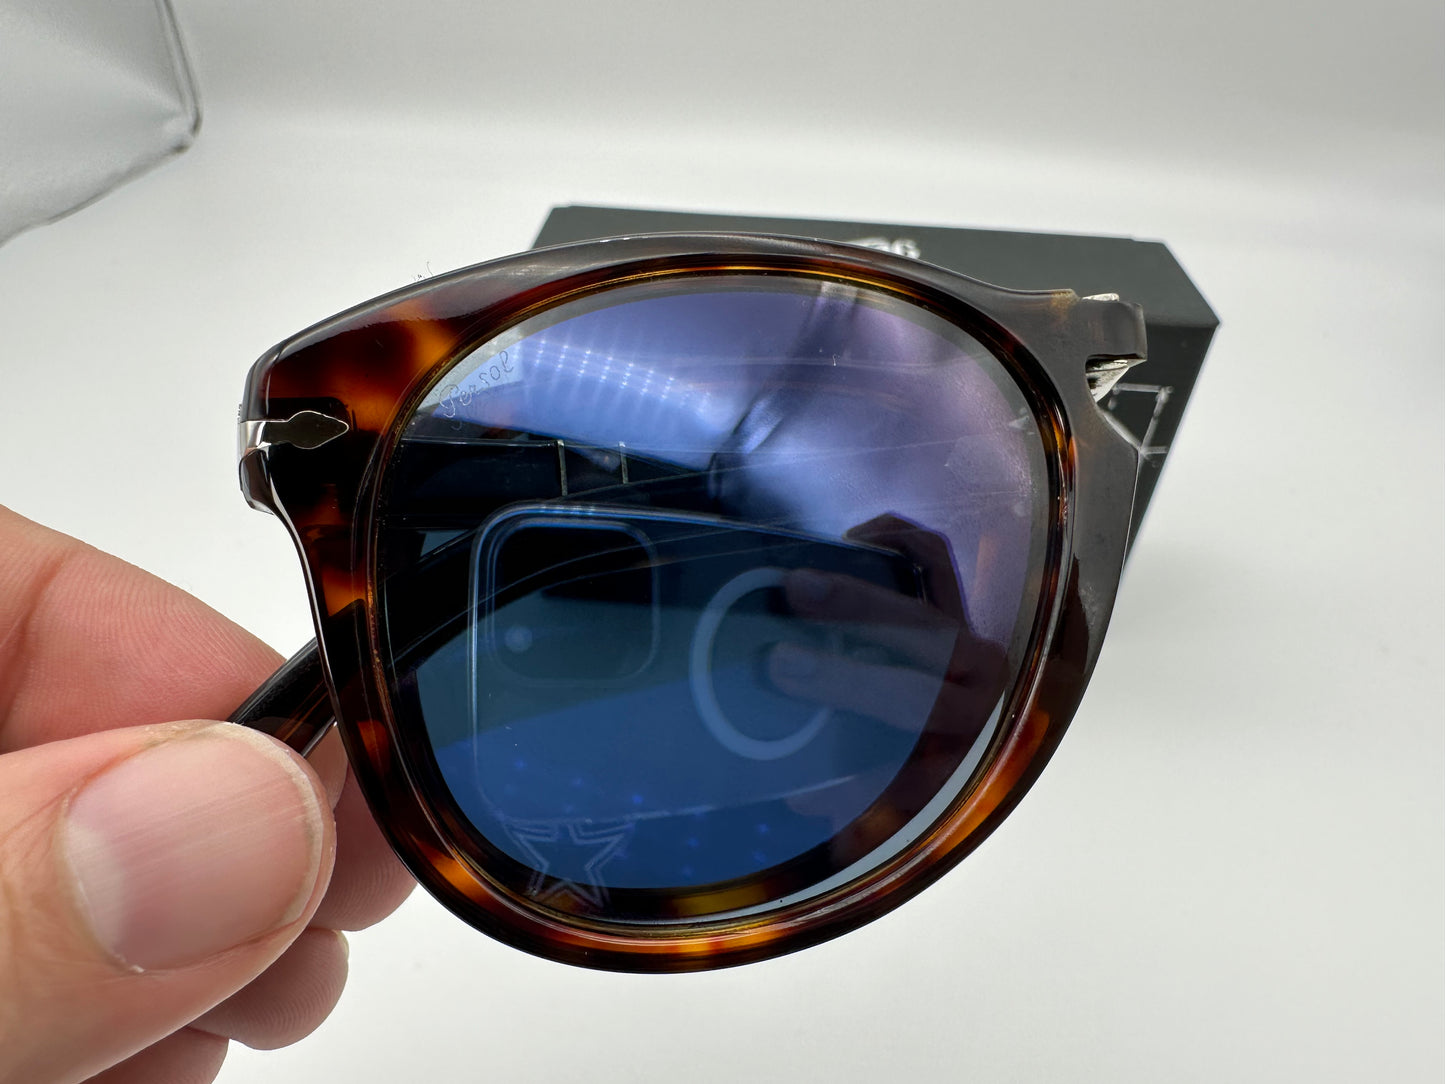 Persol PO 714 SM 54mm 24/56 Blue Havana Special Edition Steve McQueen Sunglasses PREOWNED